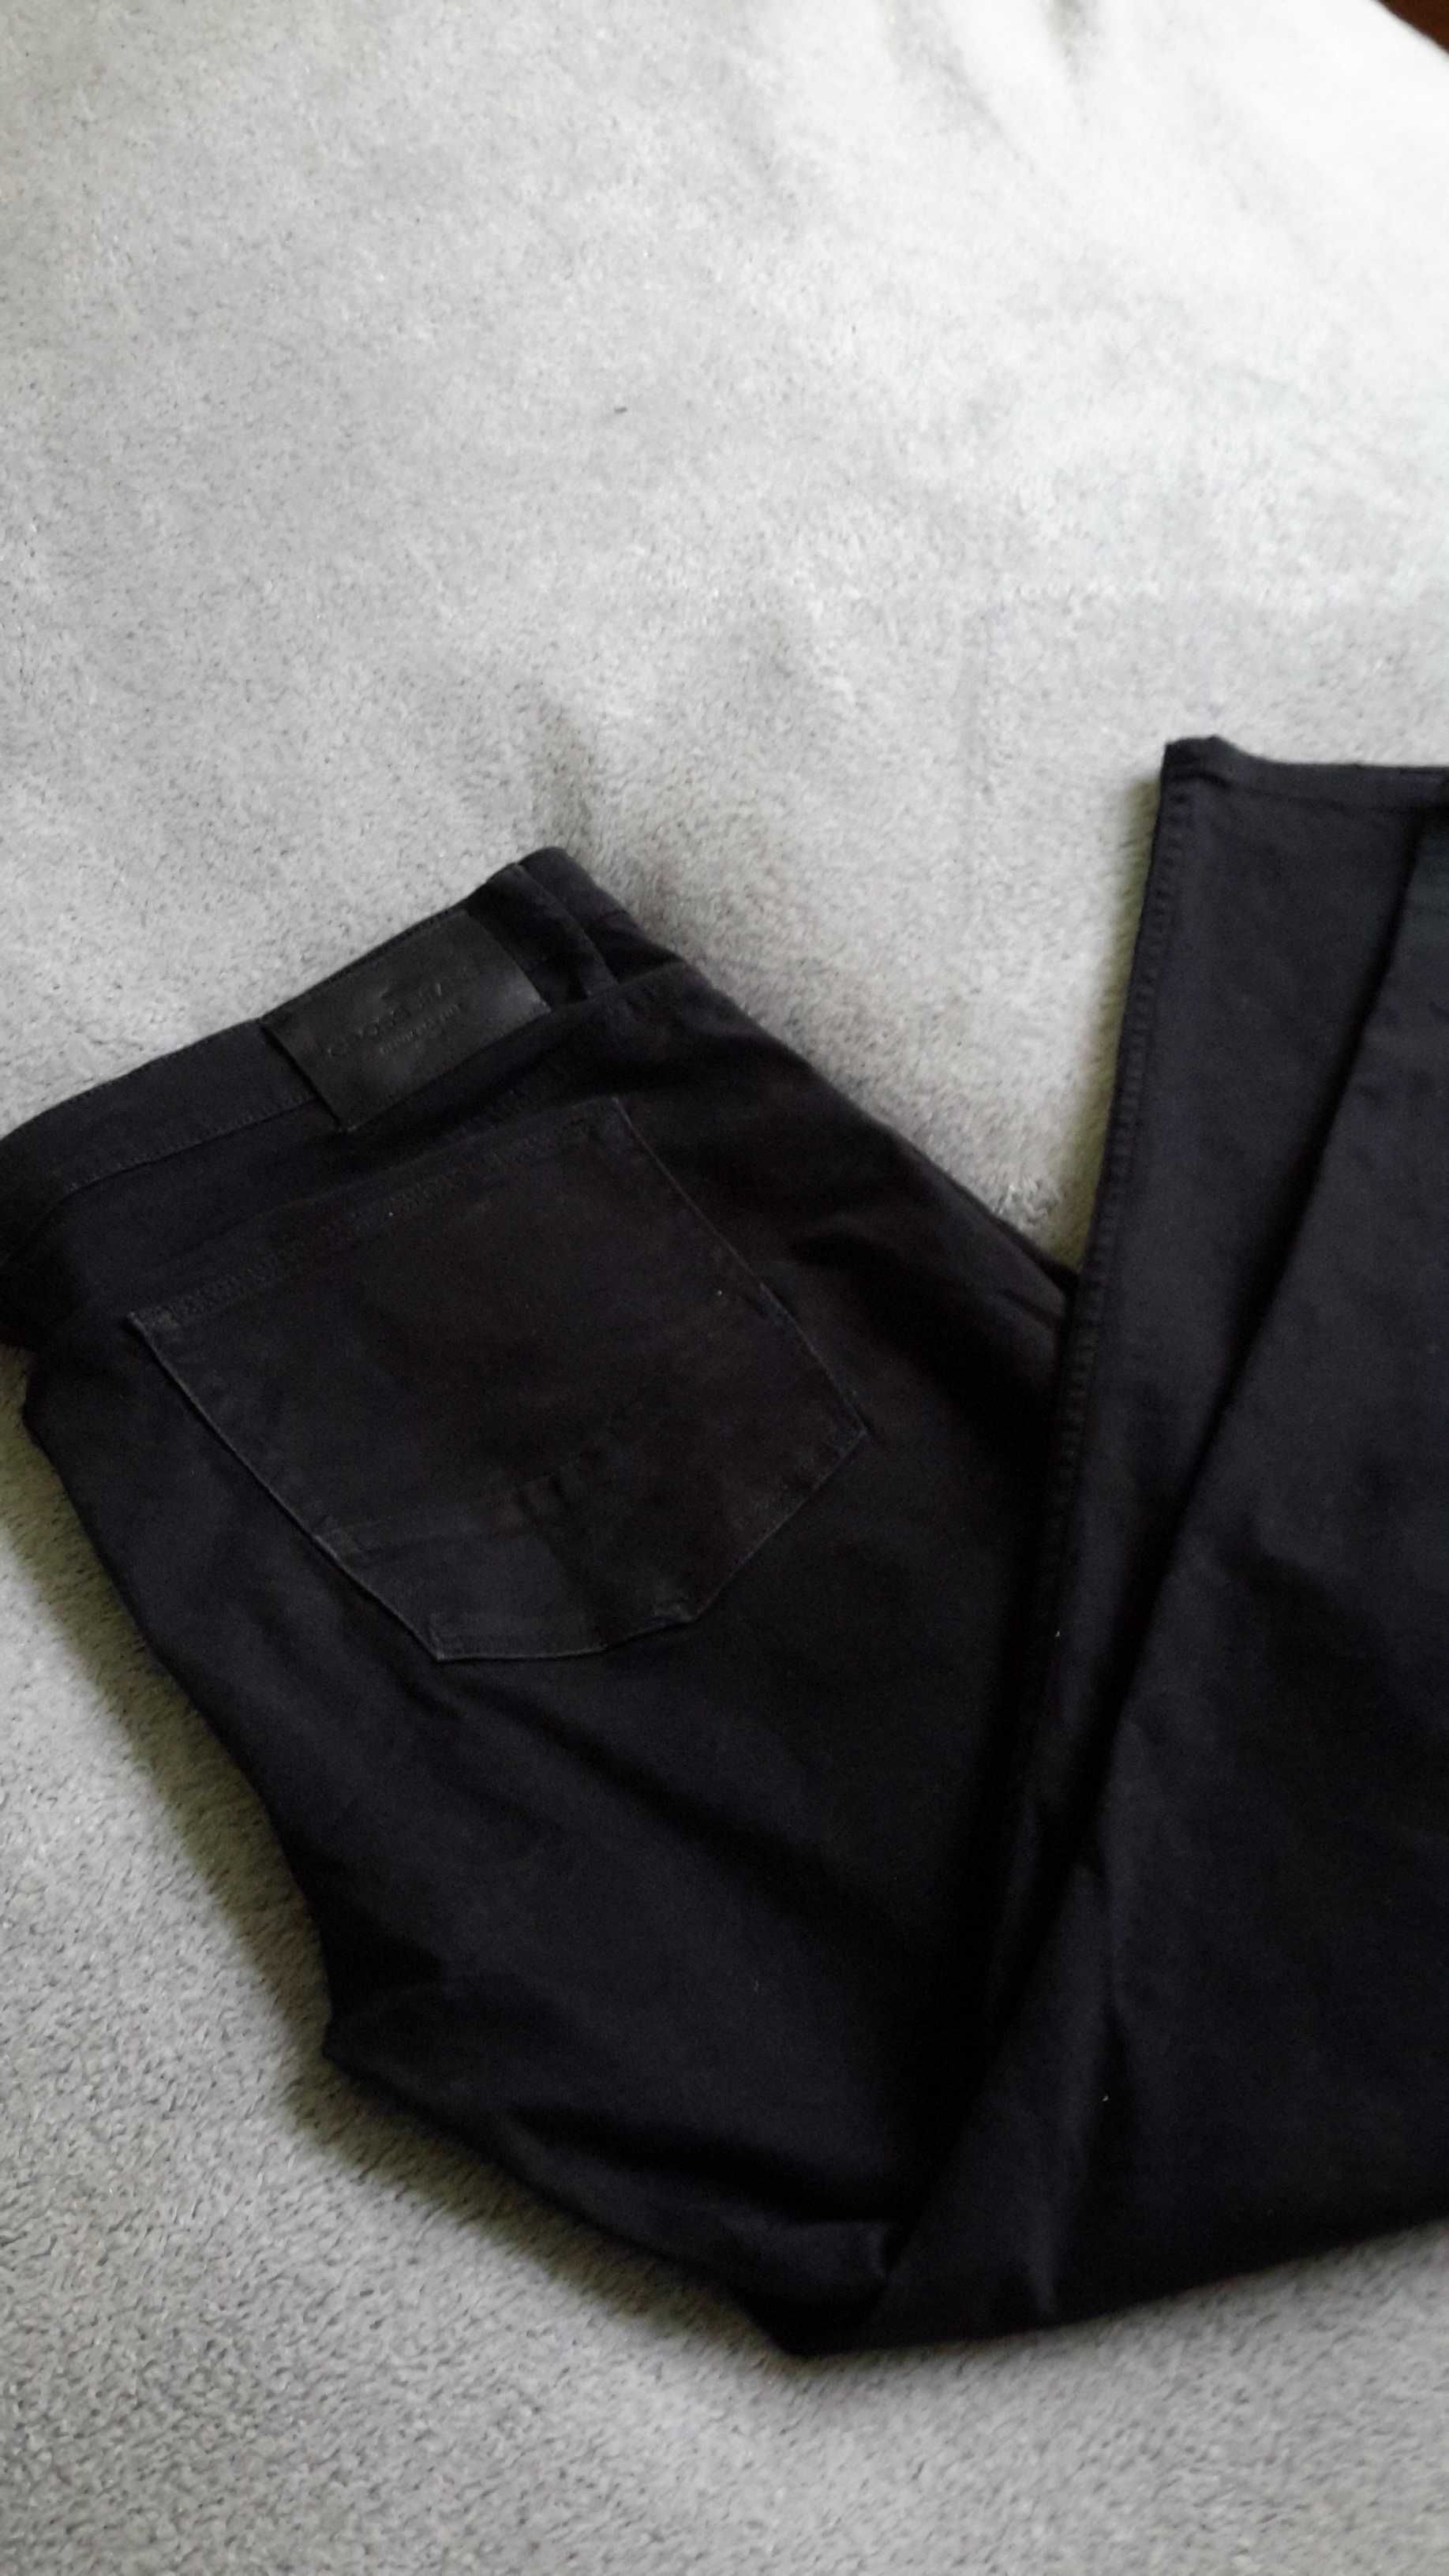 Spodnie męskie jeansy CROSS JEANS r.40/30 dżinsy  czarne pas 108 cm